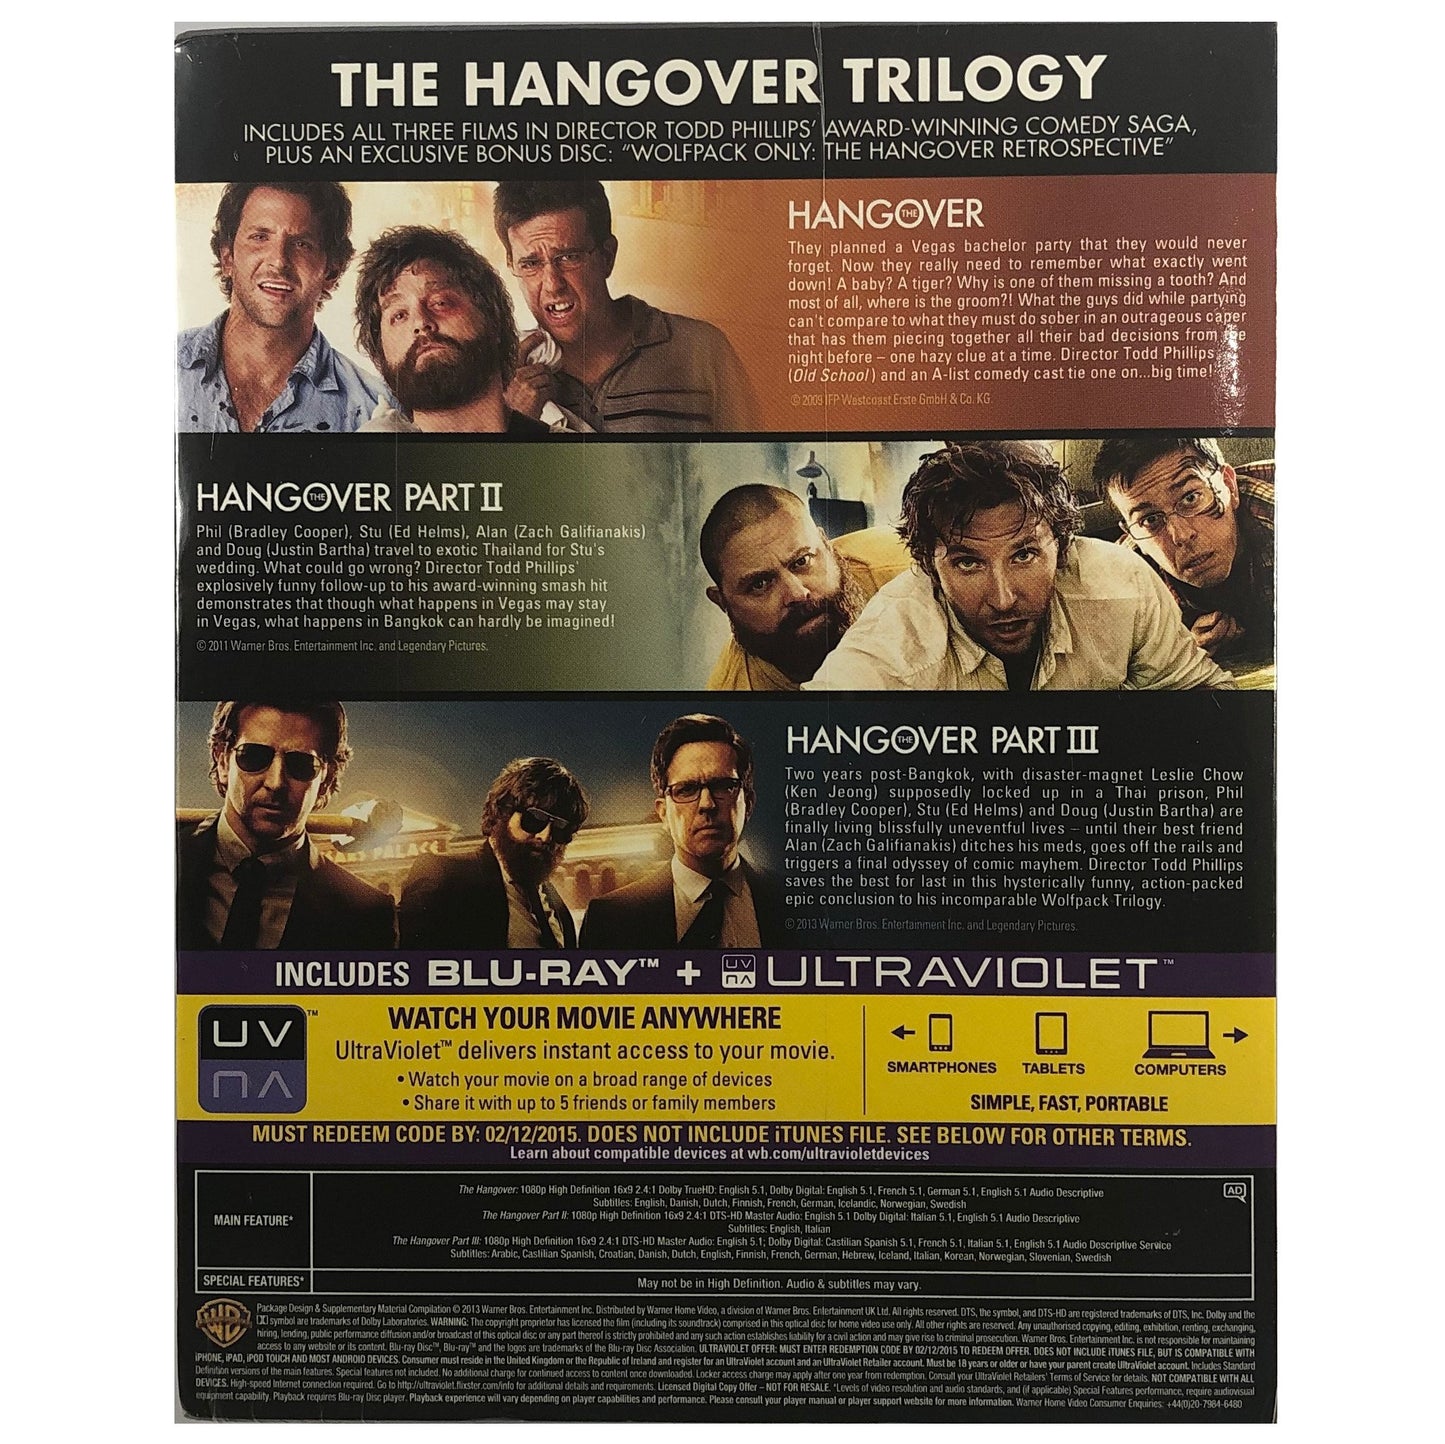 The Hangover Trilogy Blu-Ray Box Set